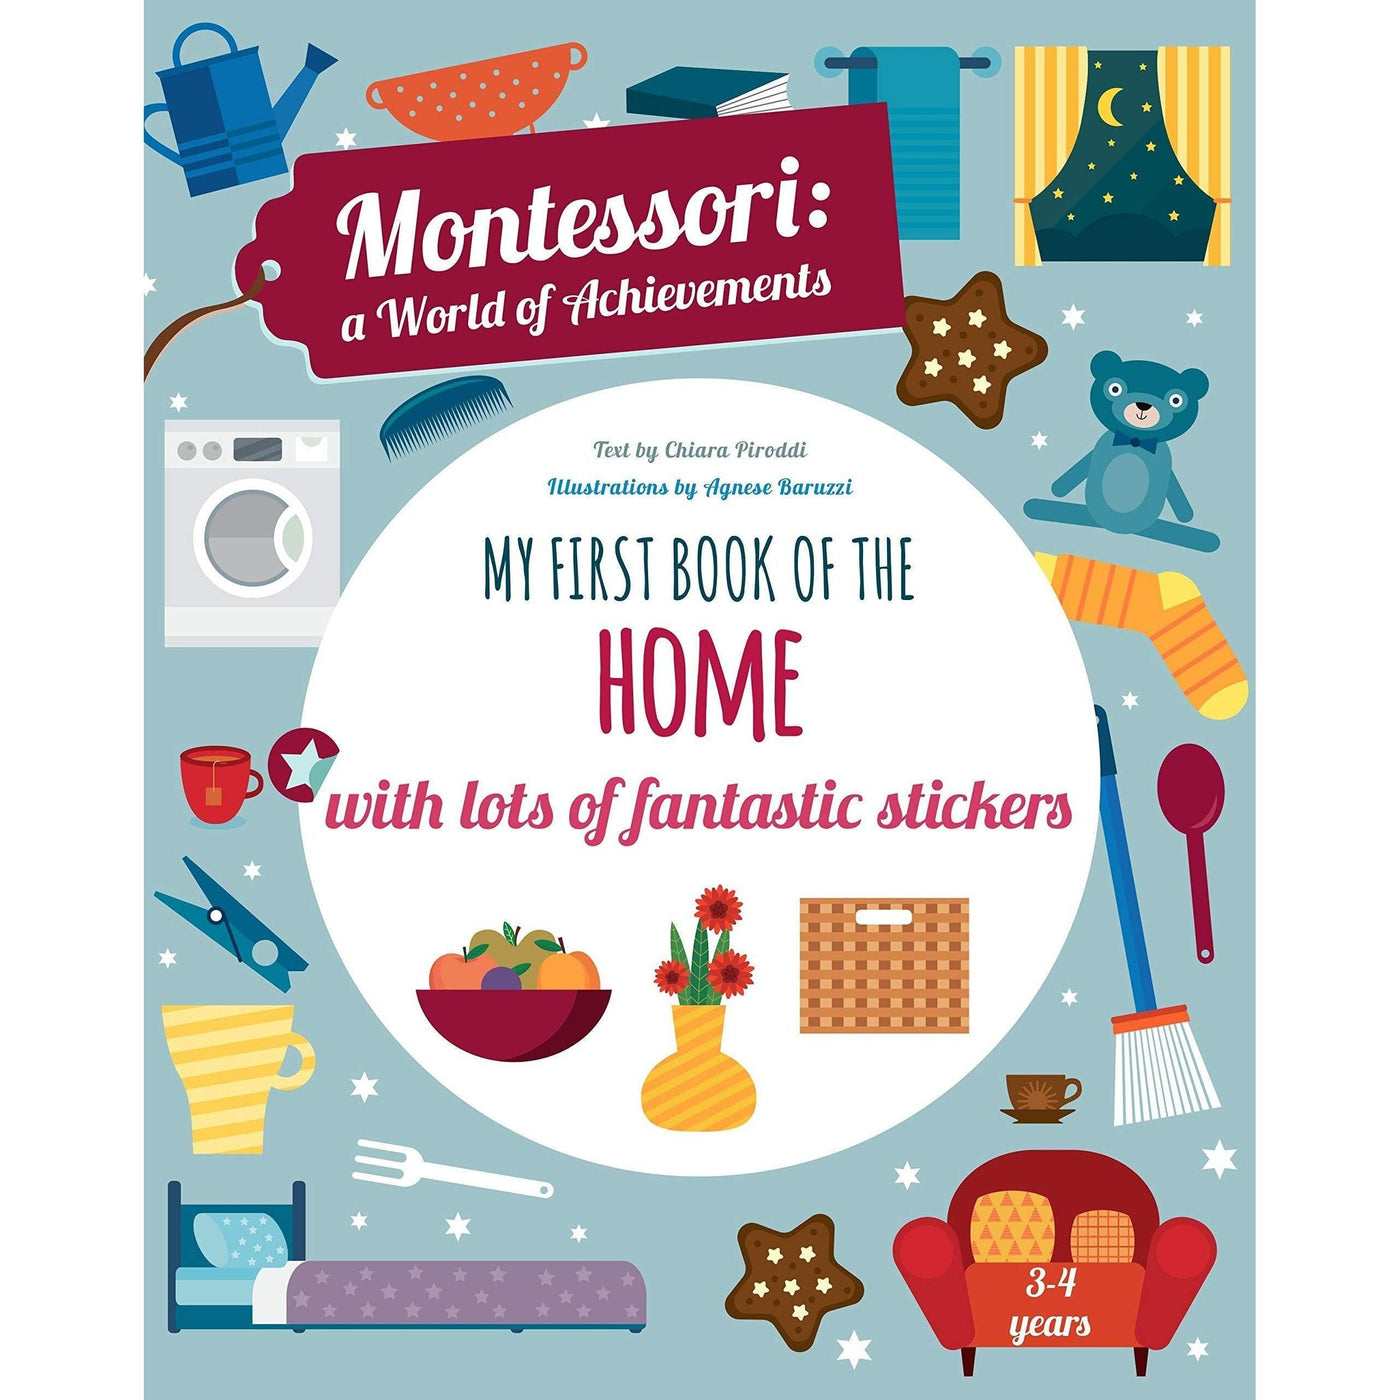 Montessori: A World Of Achievements: My First Book Of The Home - Chiara Piroddi